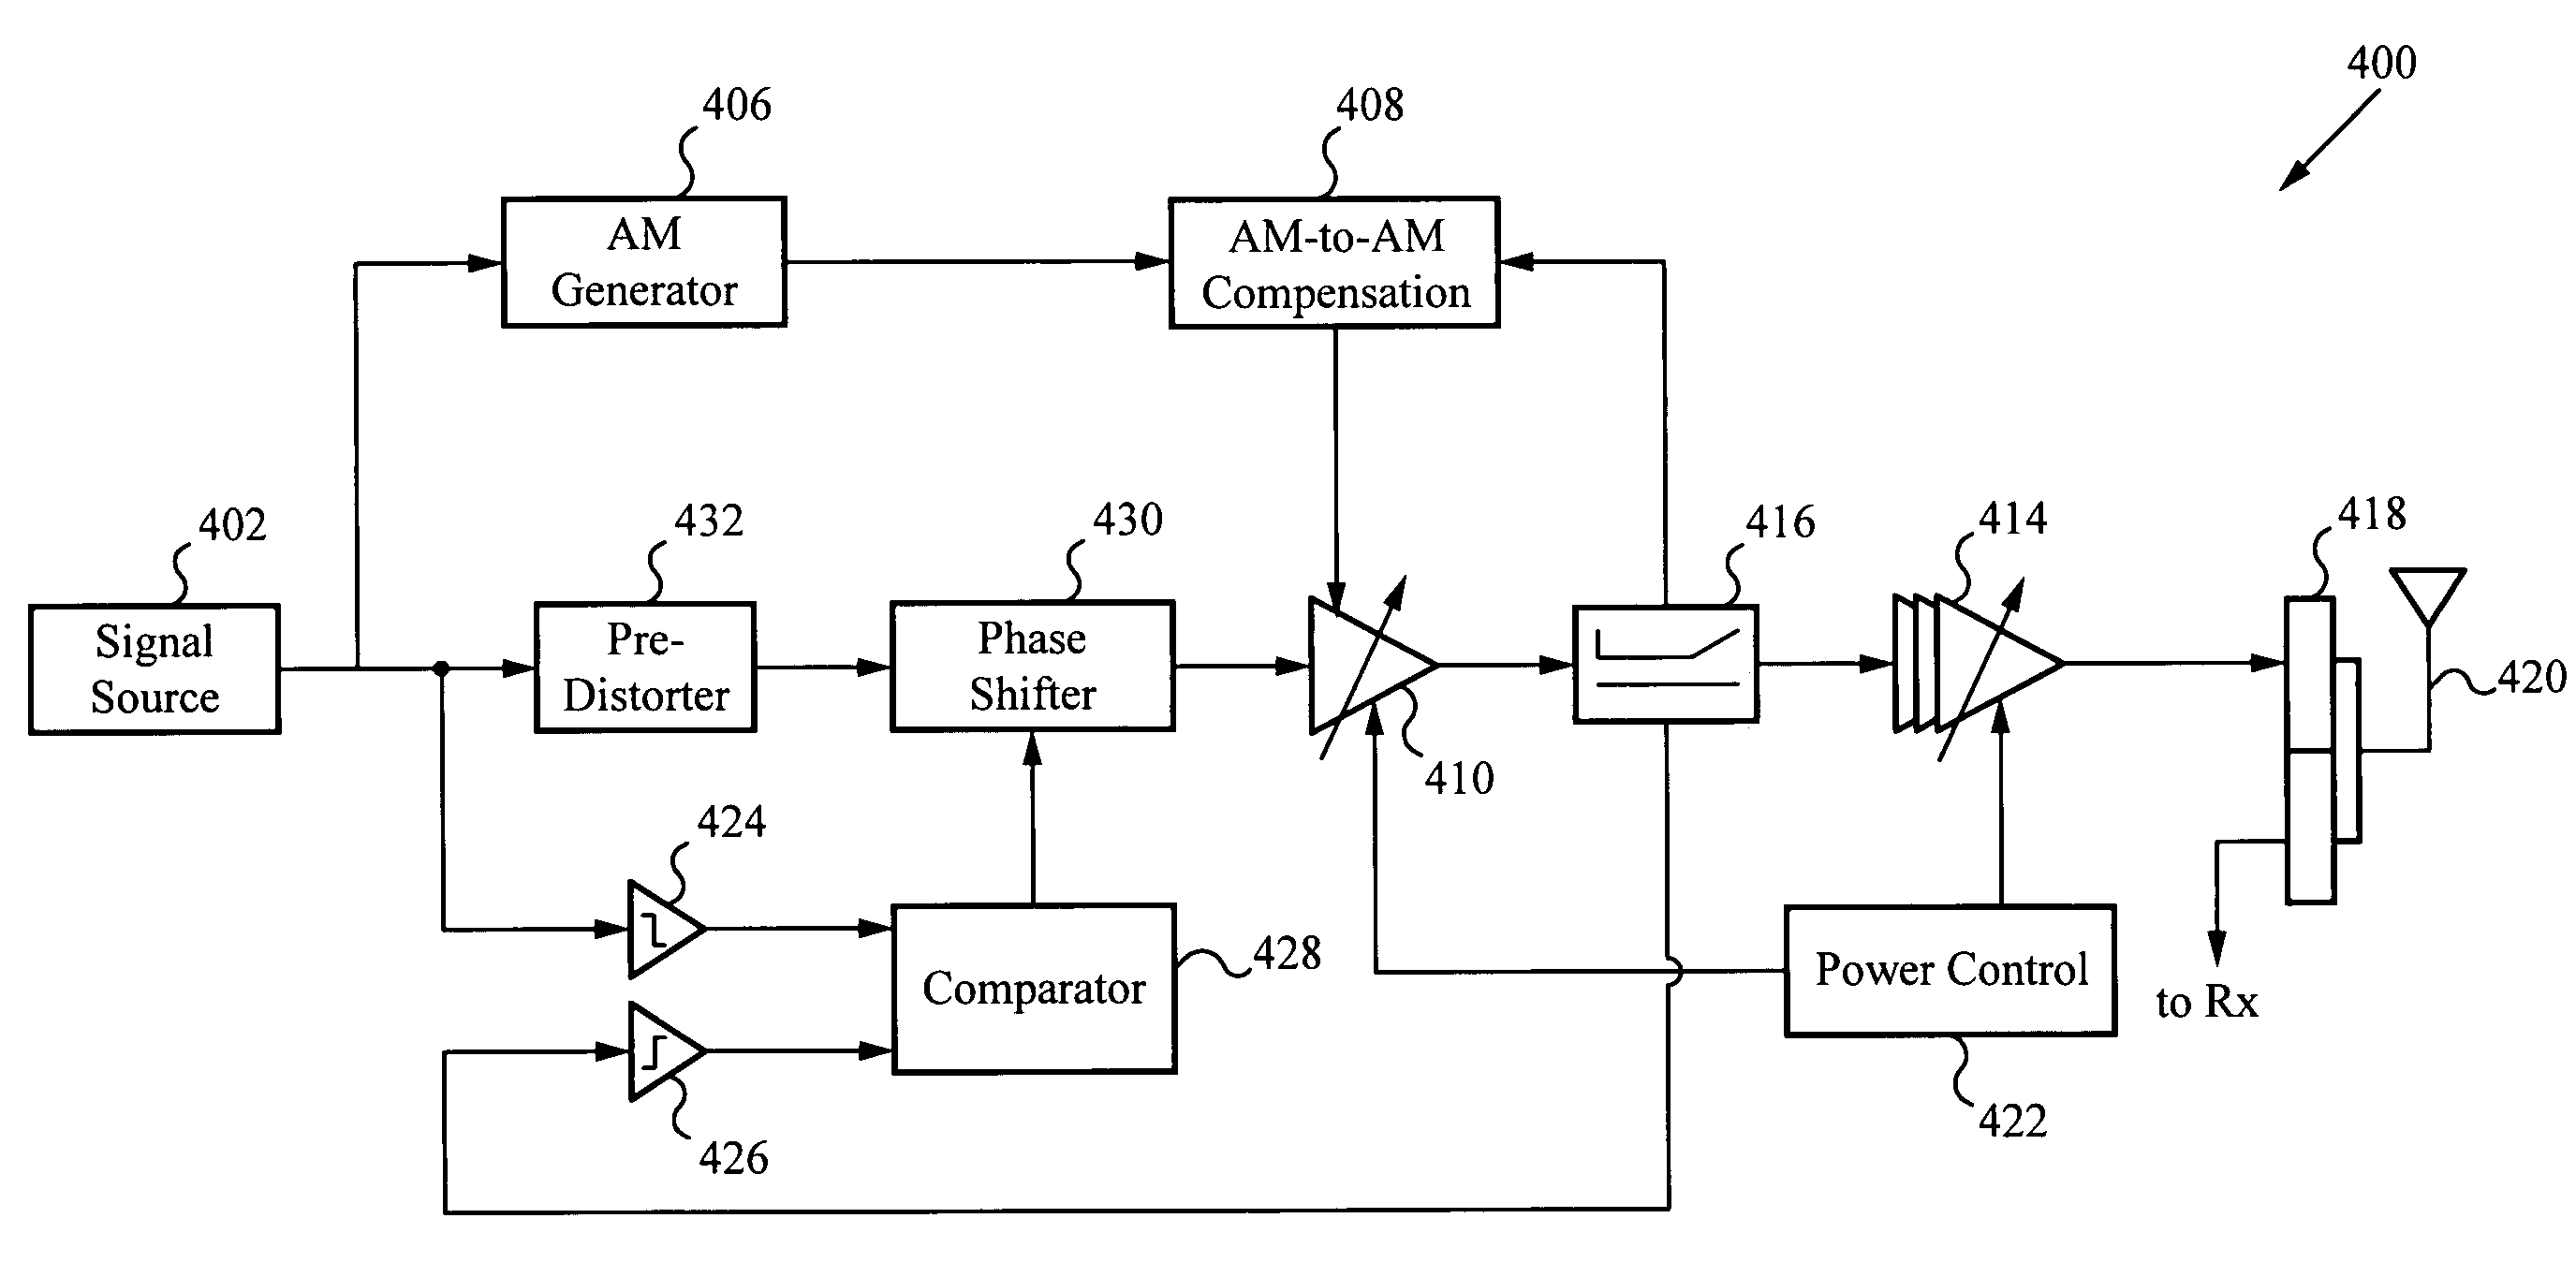 Multiple-mode modulator to process baseband signals